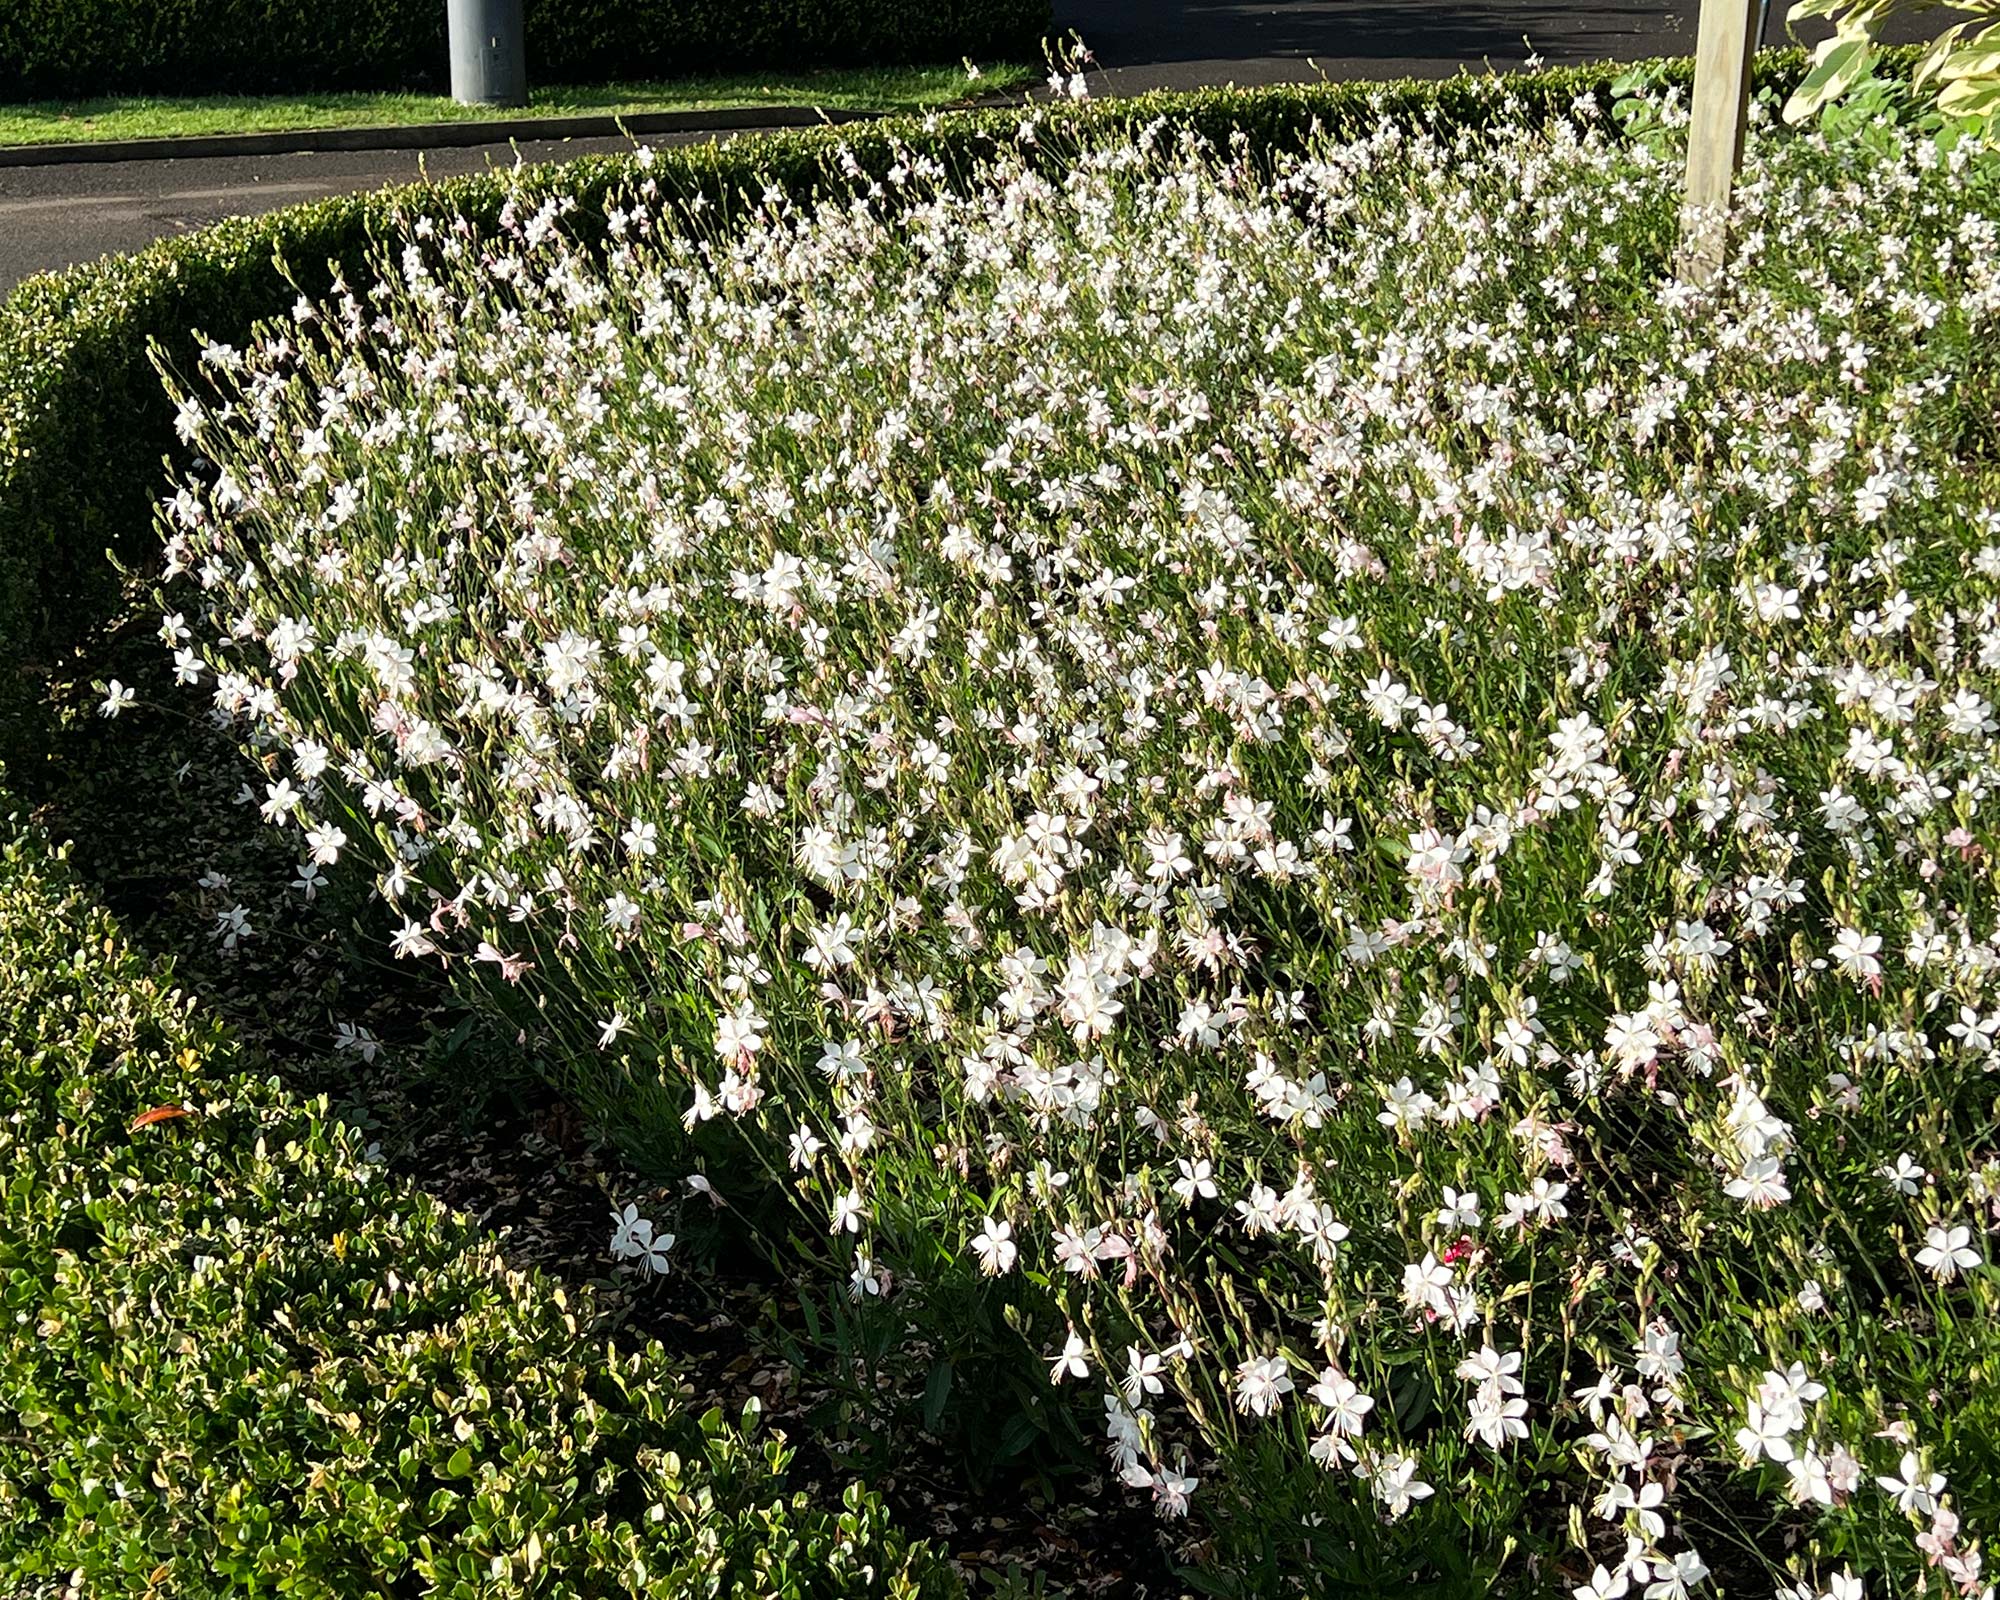 Display border of Gaura lindheimeri white flowers. Sydney Botanic Gardens